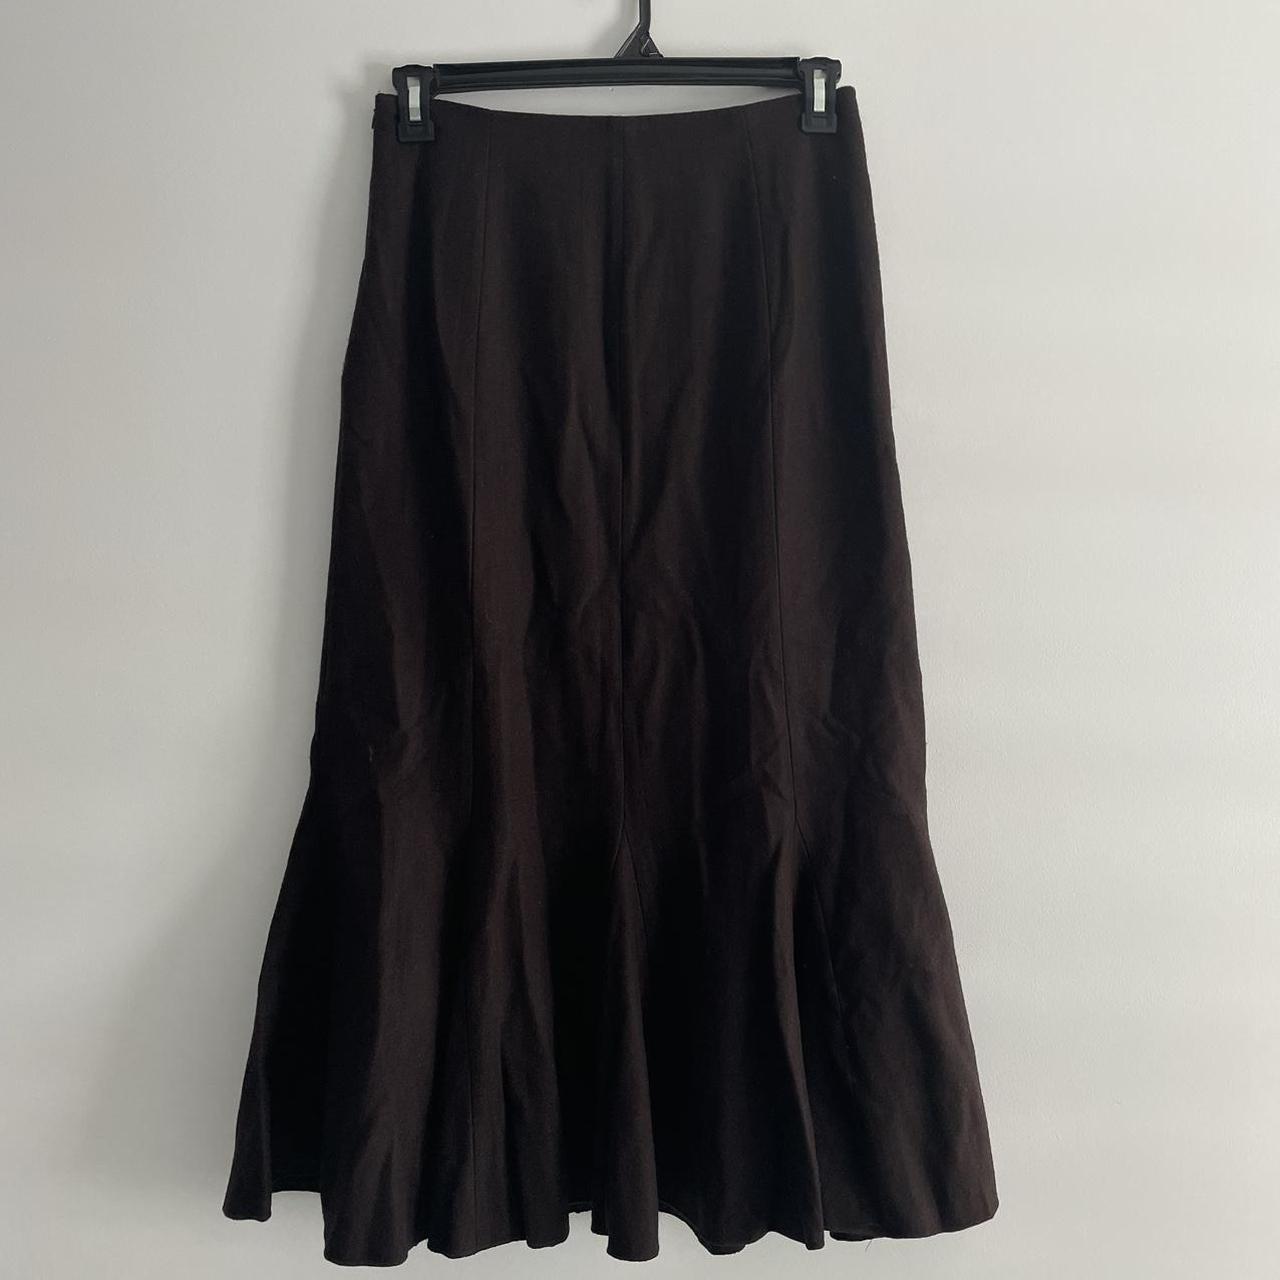 Stunning 2000s long brown mermaid skirt Slightly... - Depop